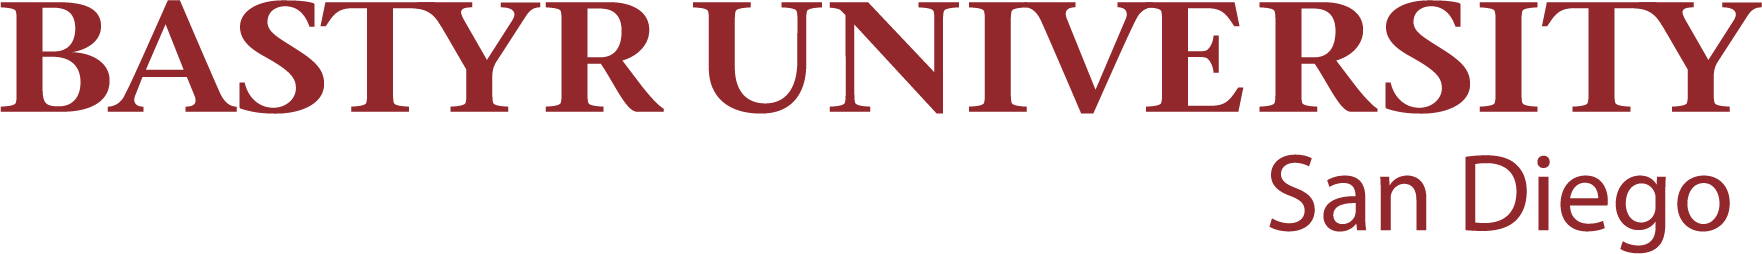 Bastyr University San Diego location logo